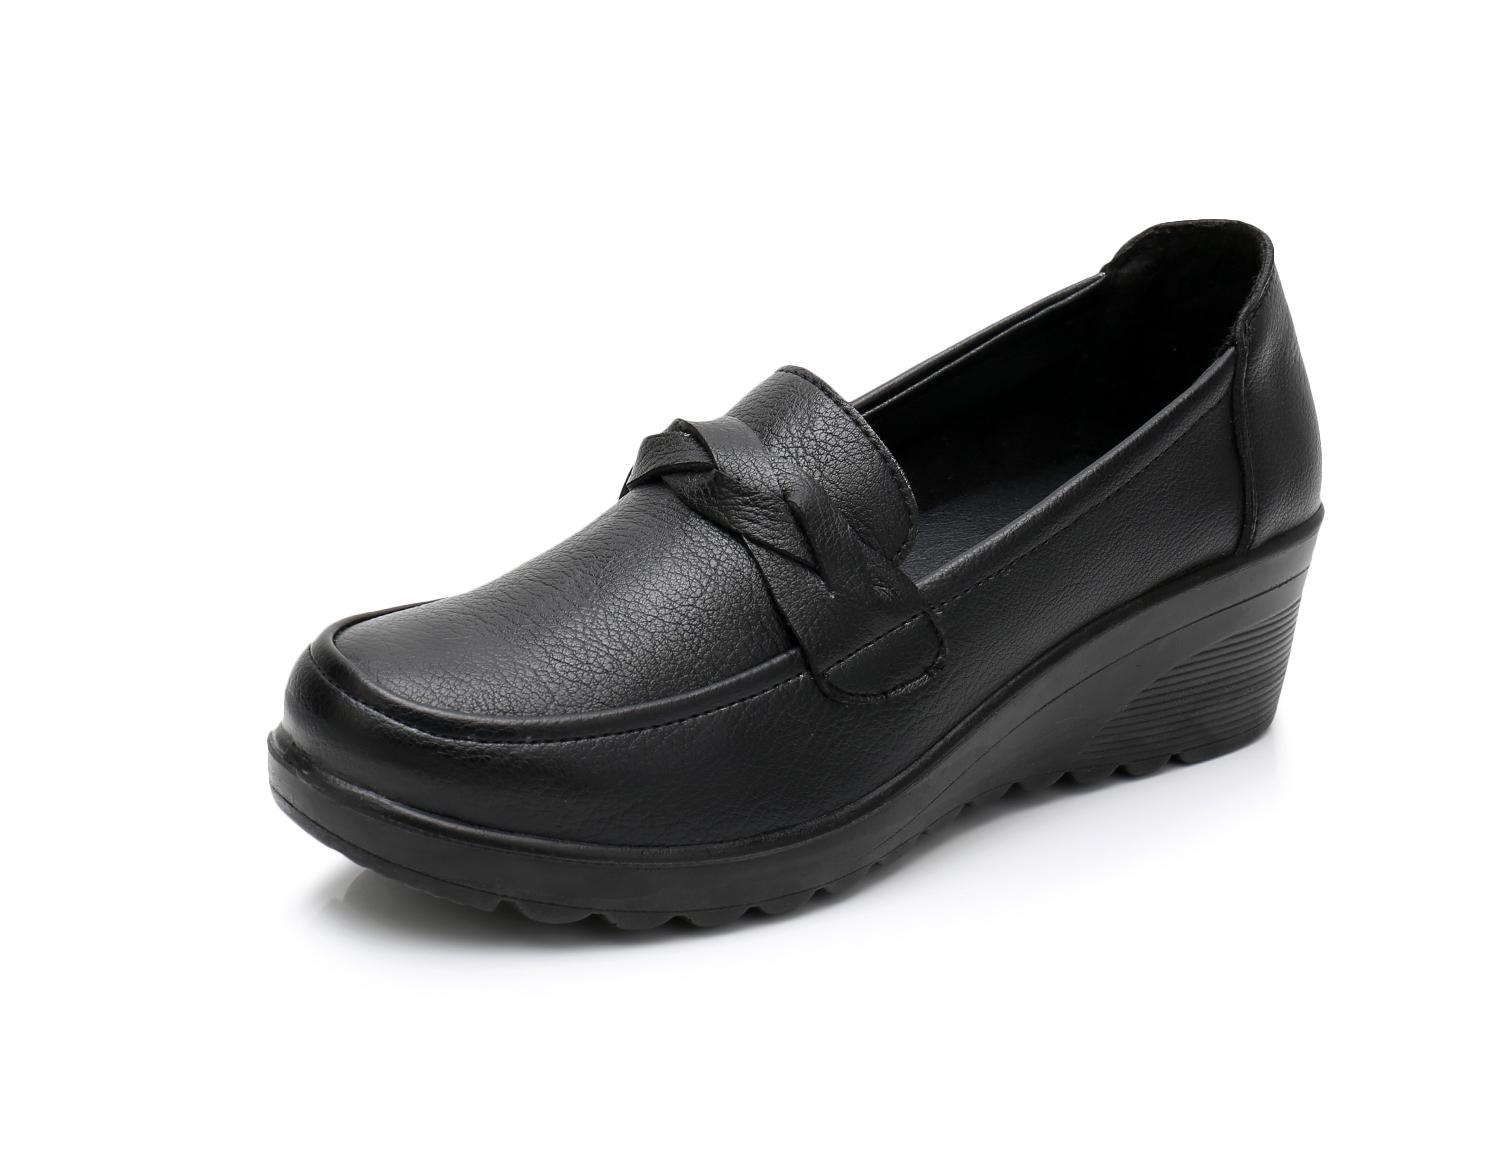 ladies black leather work shoes